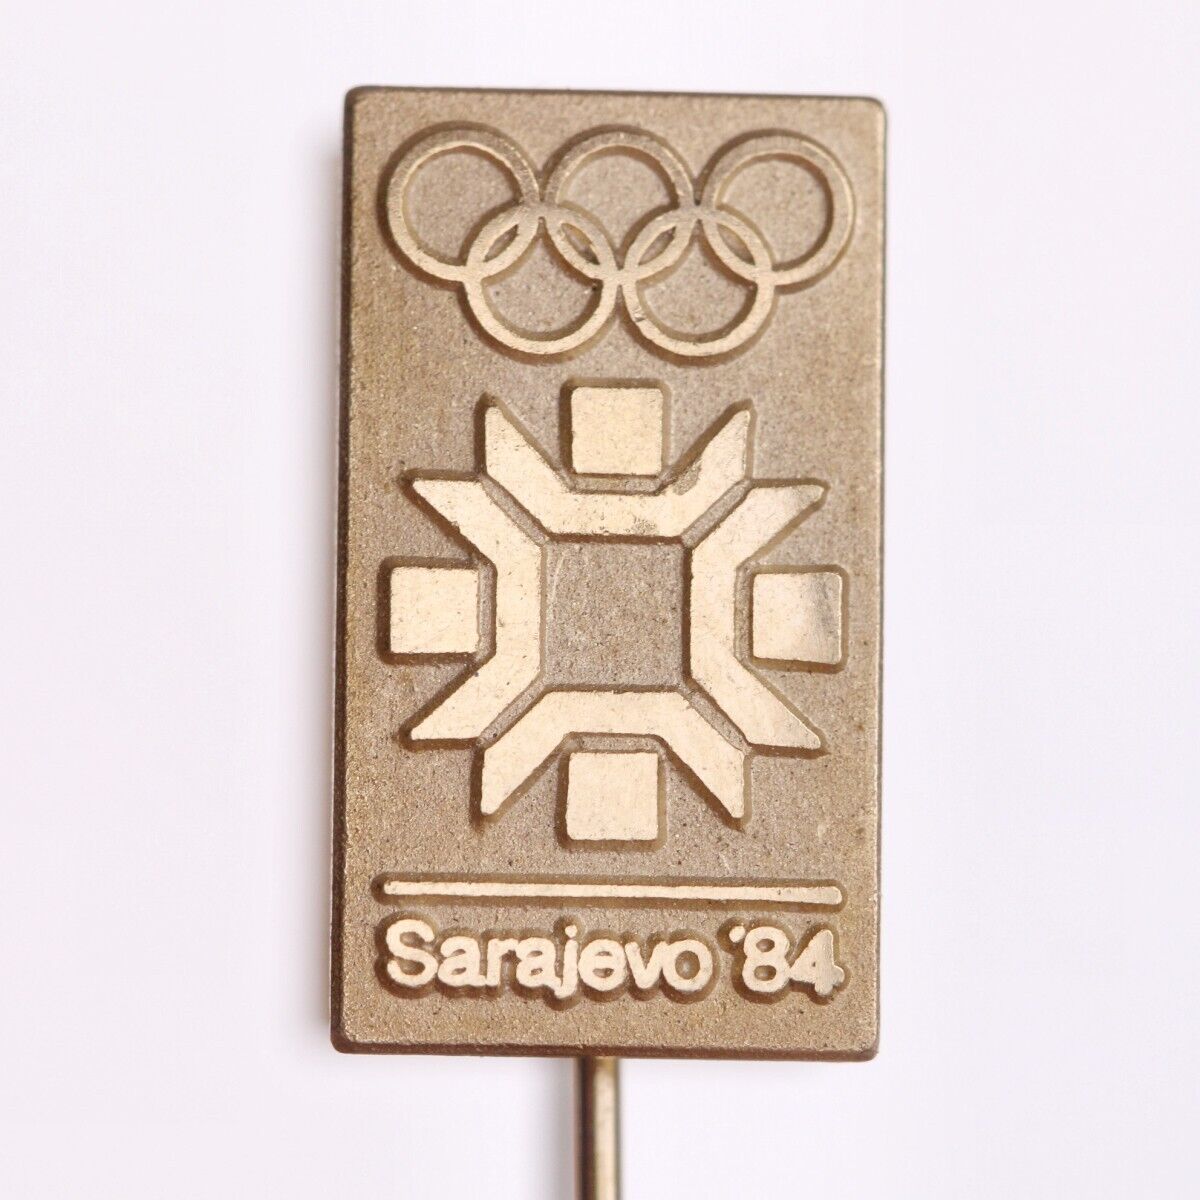 YUGOSLAVIA 1984 Sarajevo Olympic Games / logo / vintage lapel pin